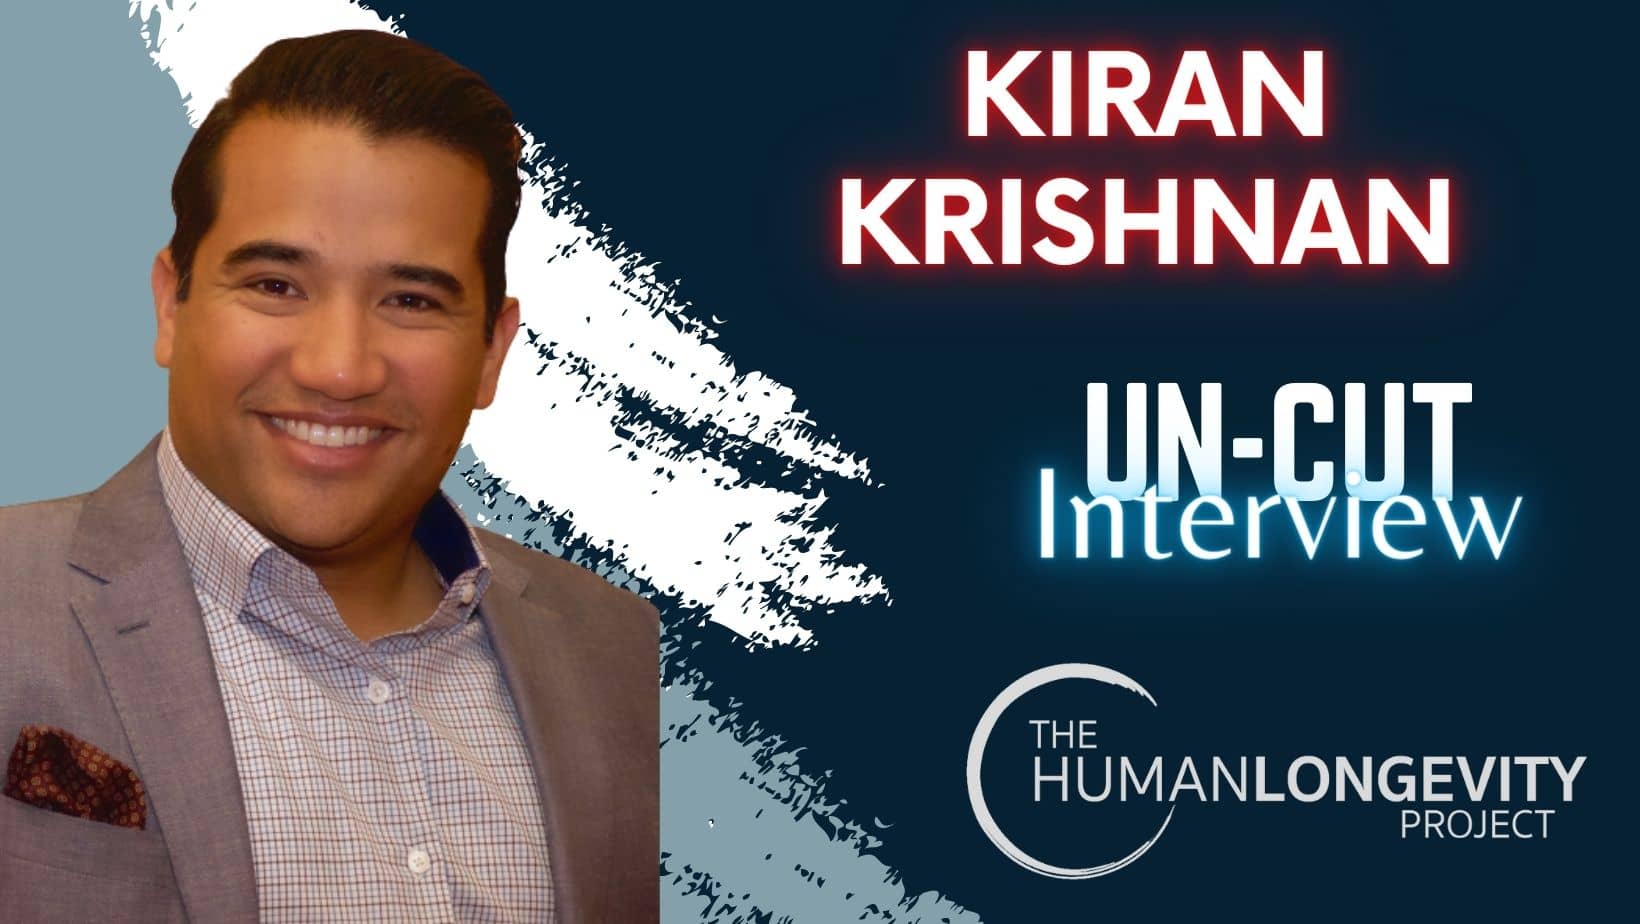 Human Longevity Project Uncut Interview With Kiran Krishnan